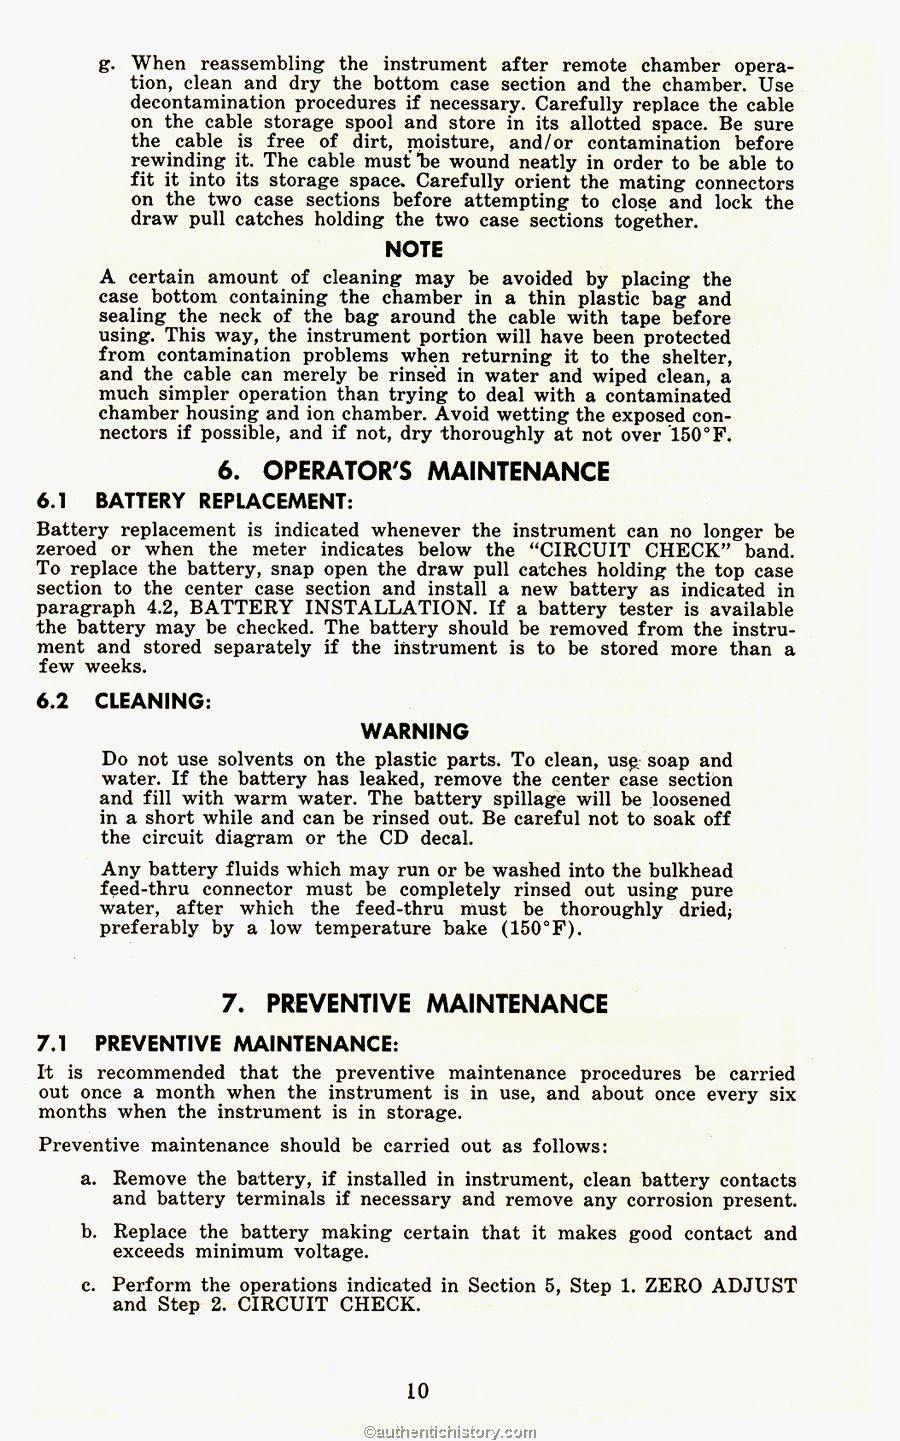 Radiological Survey Meter & Maintenance Manual (1964)